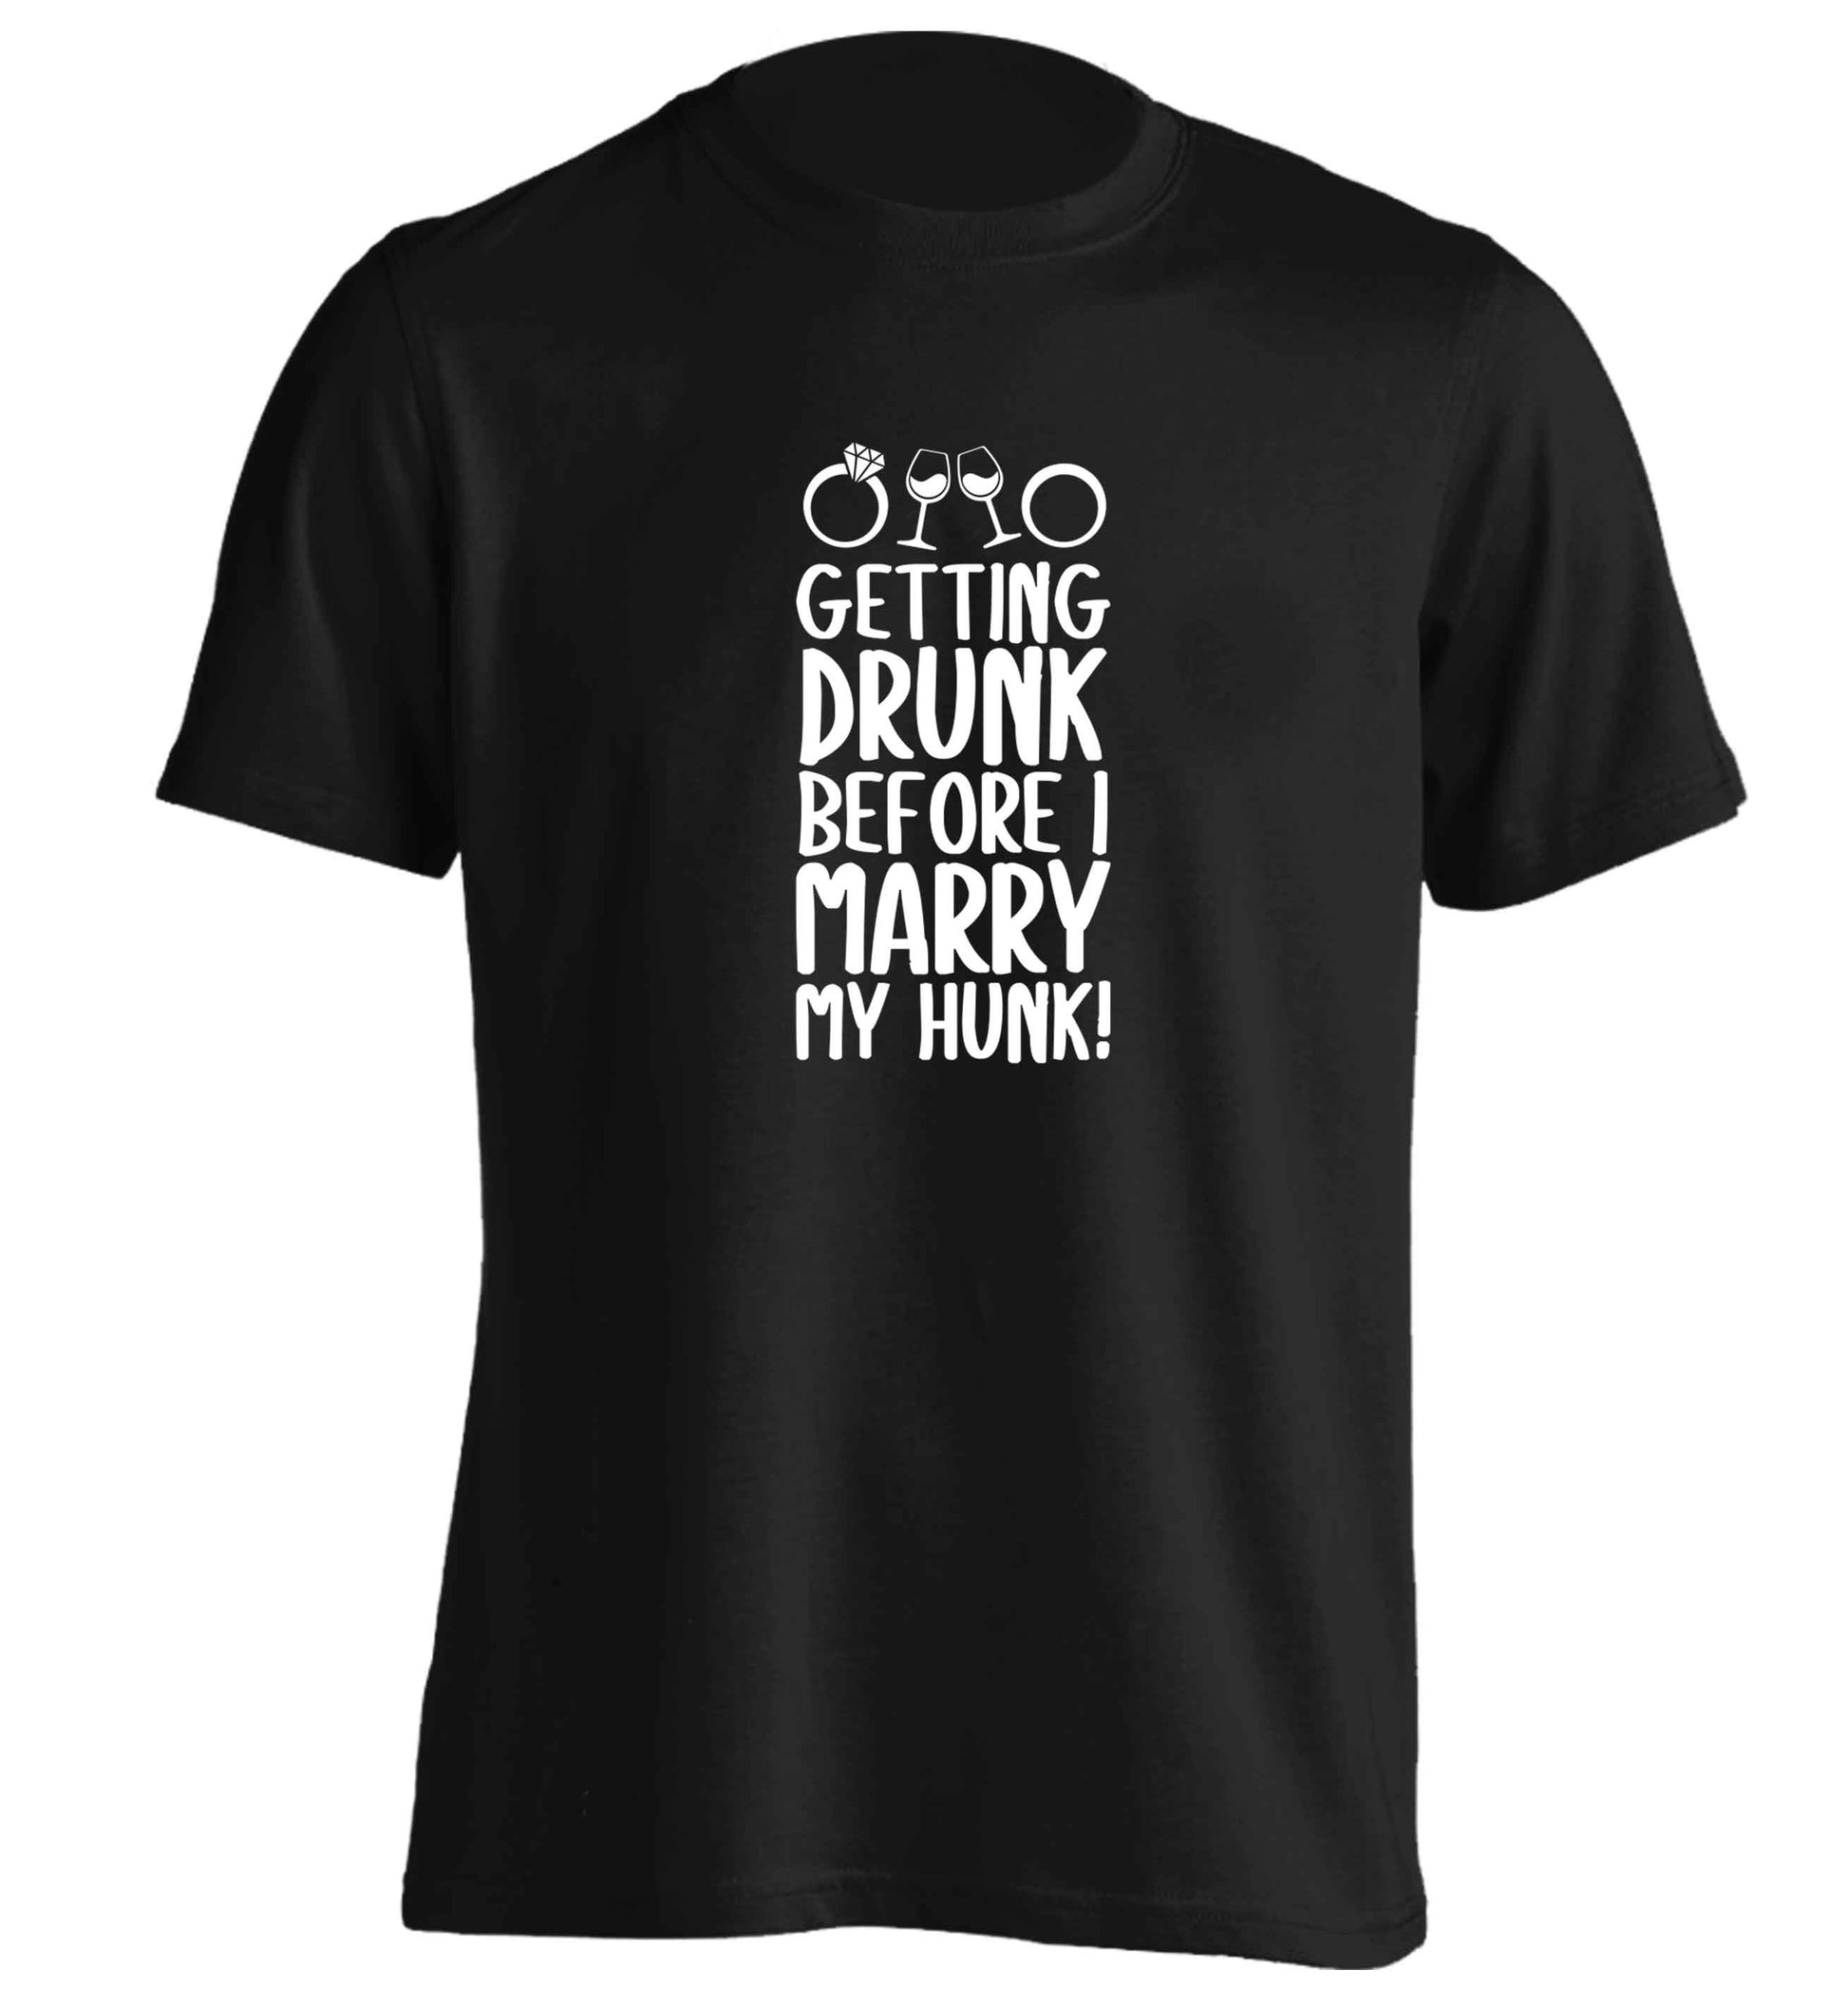 Getting drunk before I marry my hunk adults unisex black Tshirt 2XL